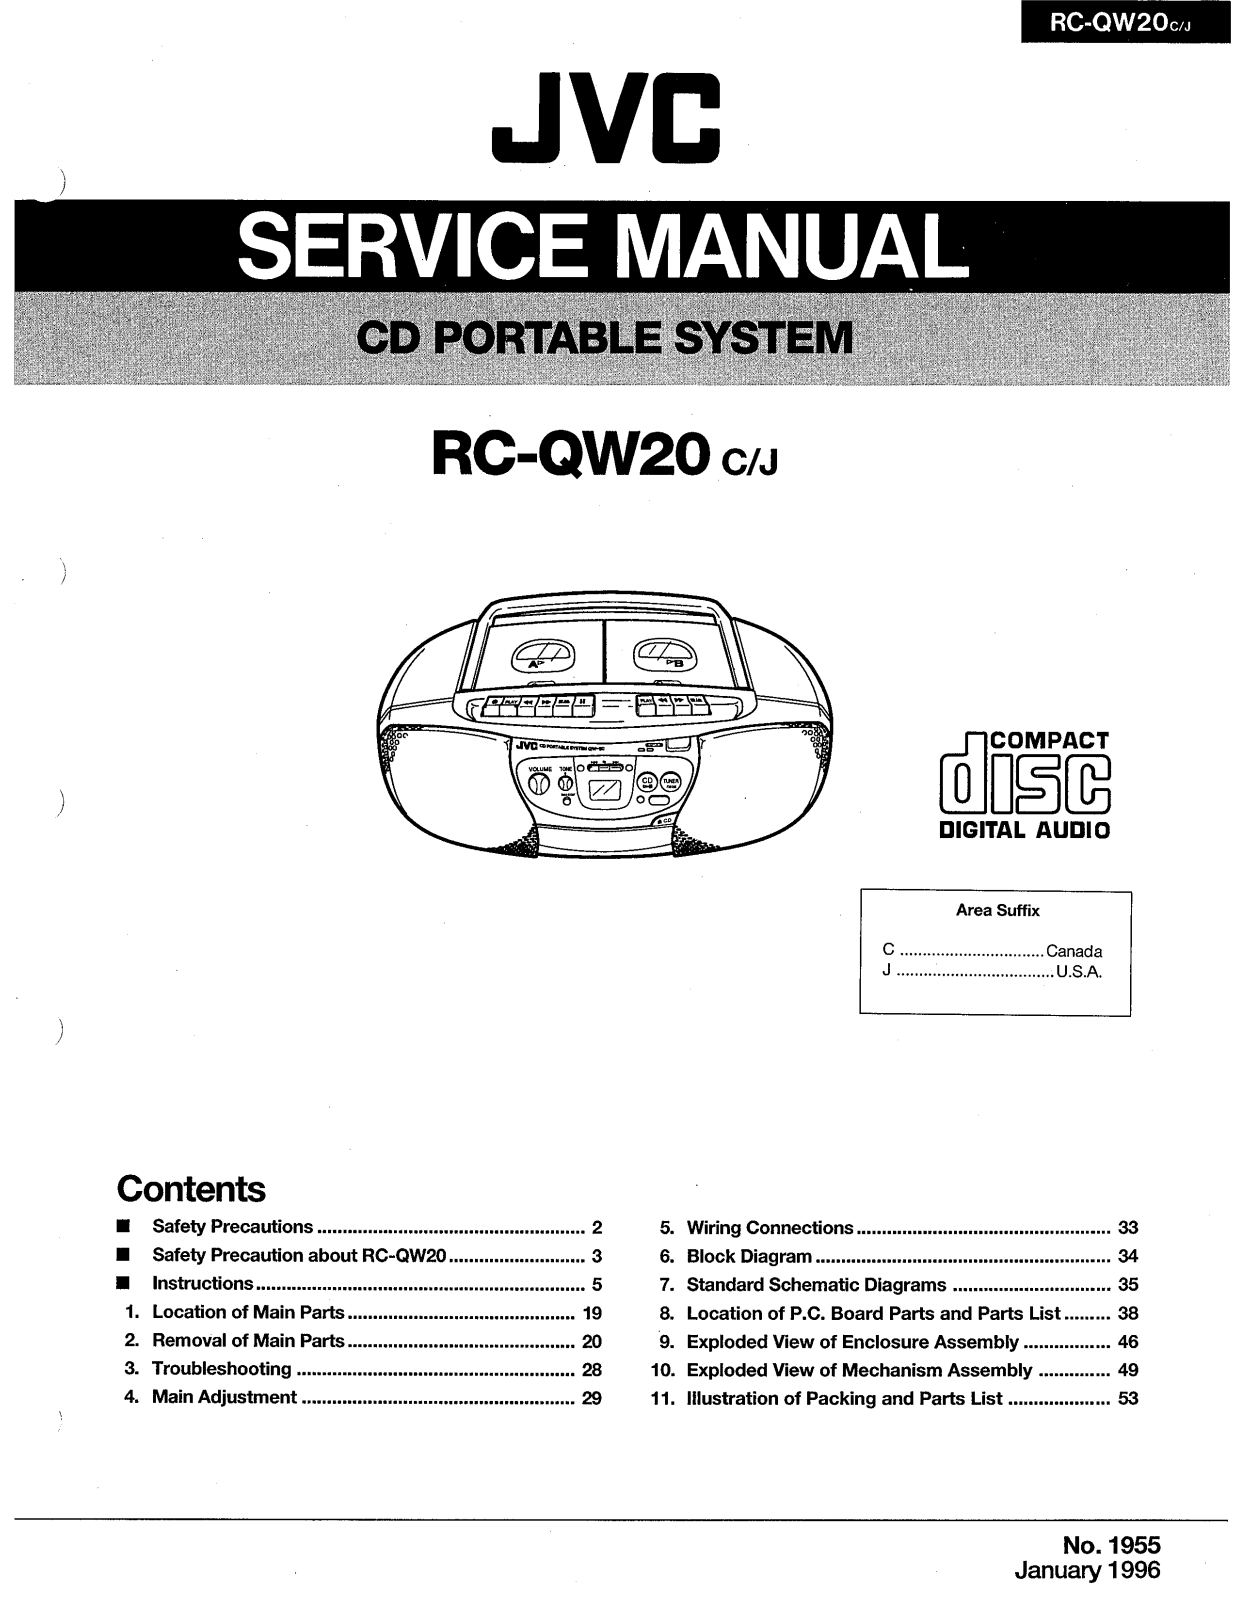 JVC RC-QW20 Service Manual